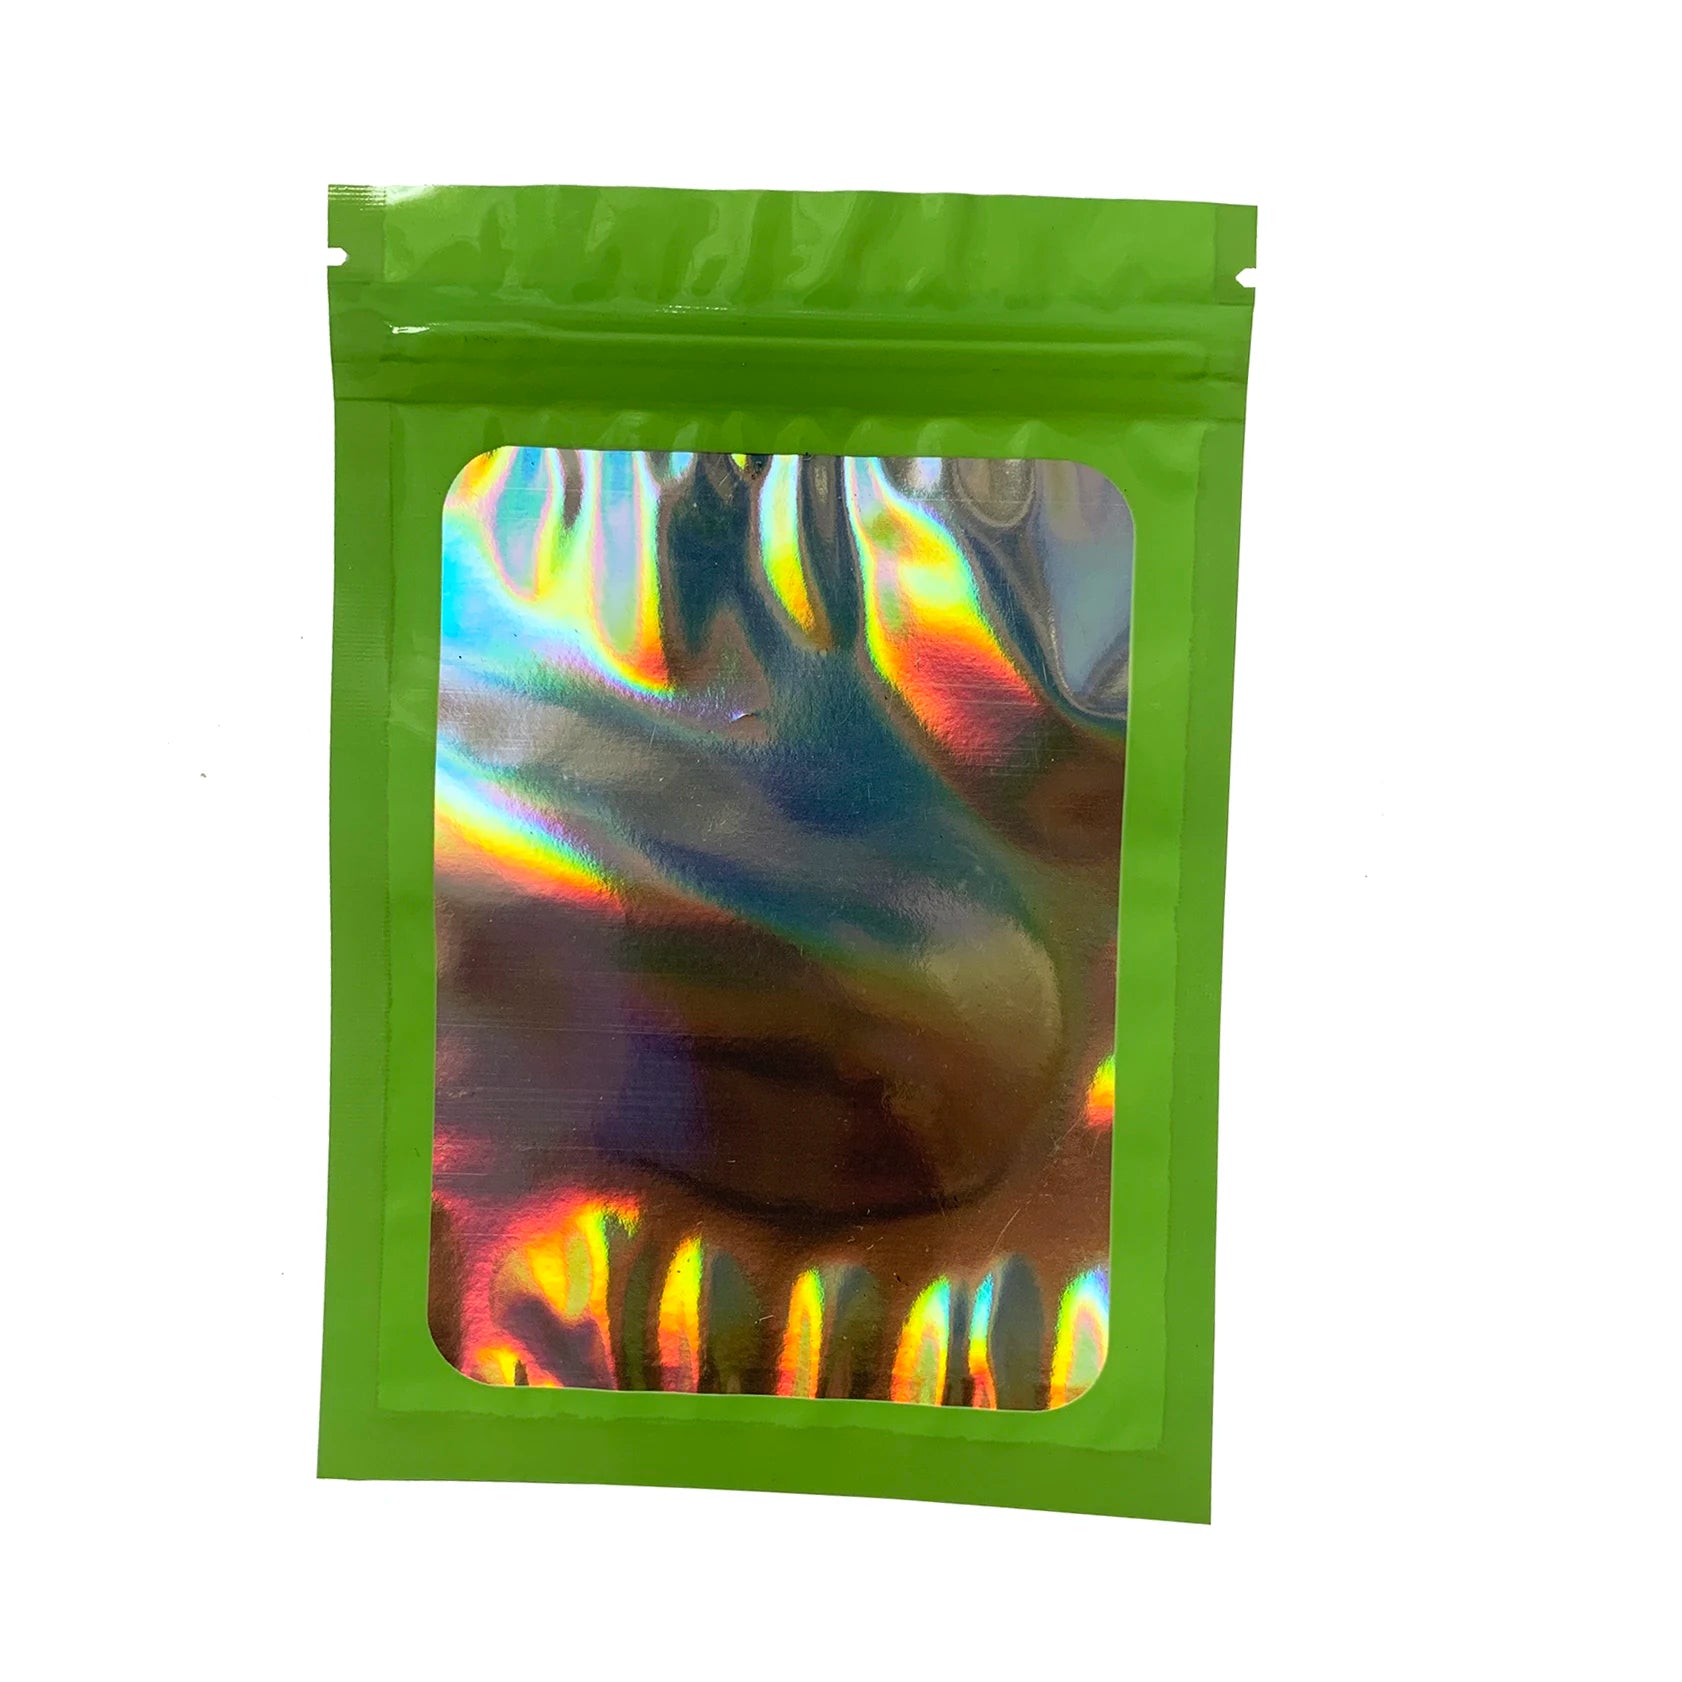 50pcSthick Geruch Proof Mylar Bags Holographische Laserfarbe Plastik Verpackung Beutel Schmuck Juwelengeschäfte Aufbewahrungsbeutel Geschenk Reißverschluss Schloss Tasche